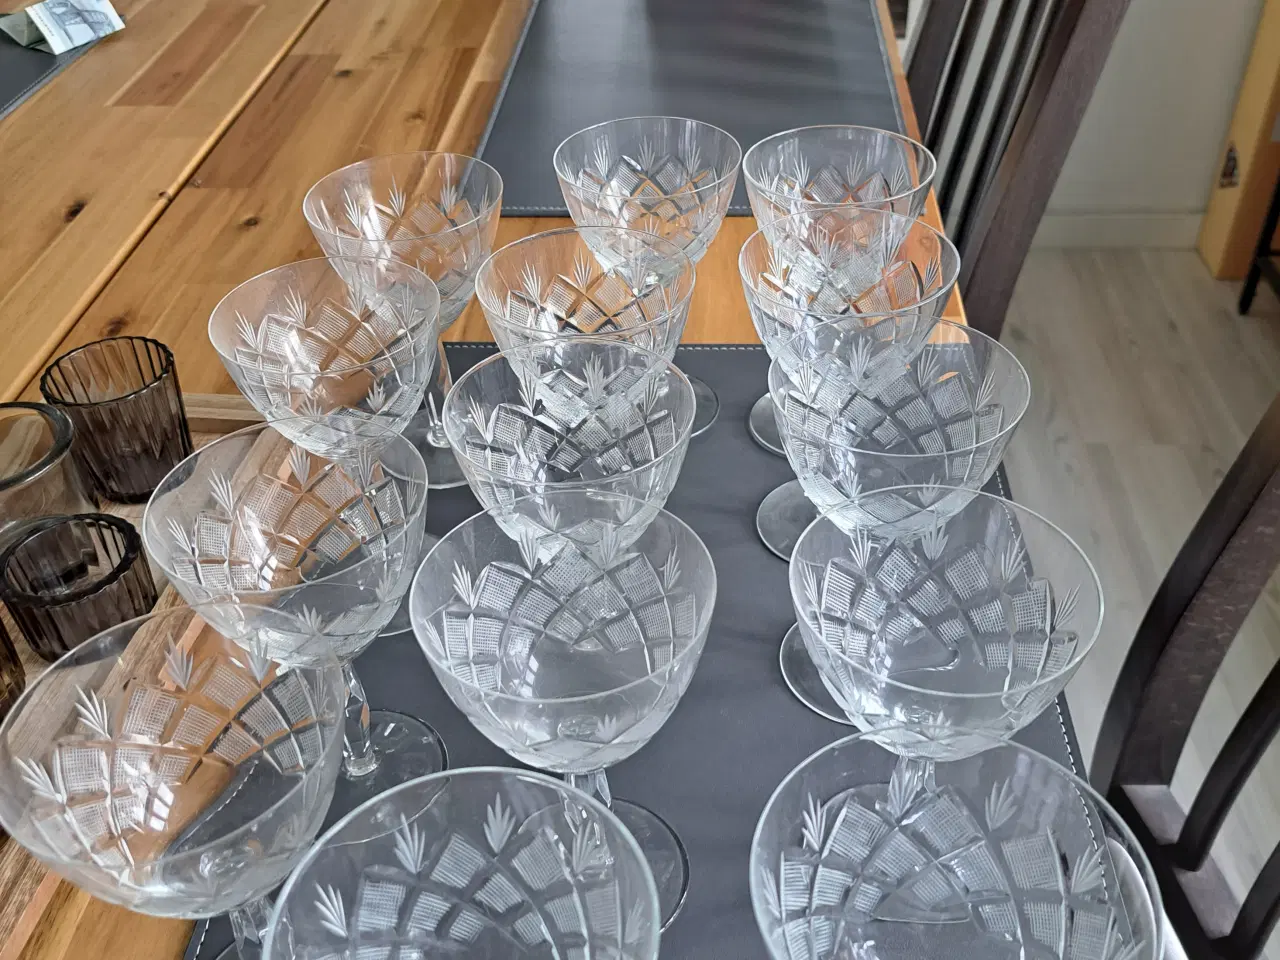 Billede 2 - Forskellige Lyngby glas.